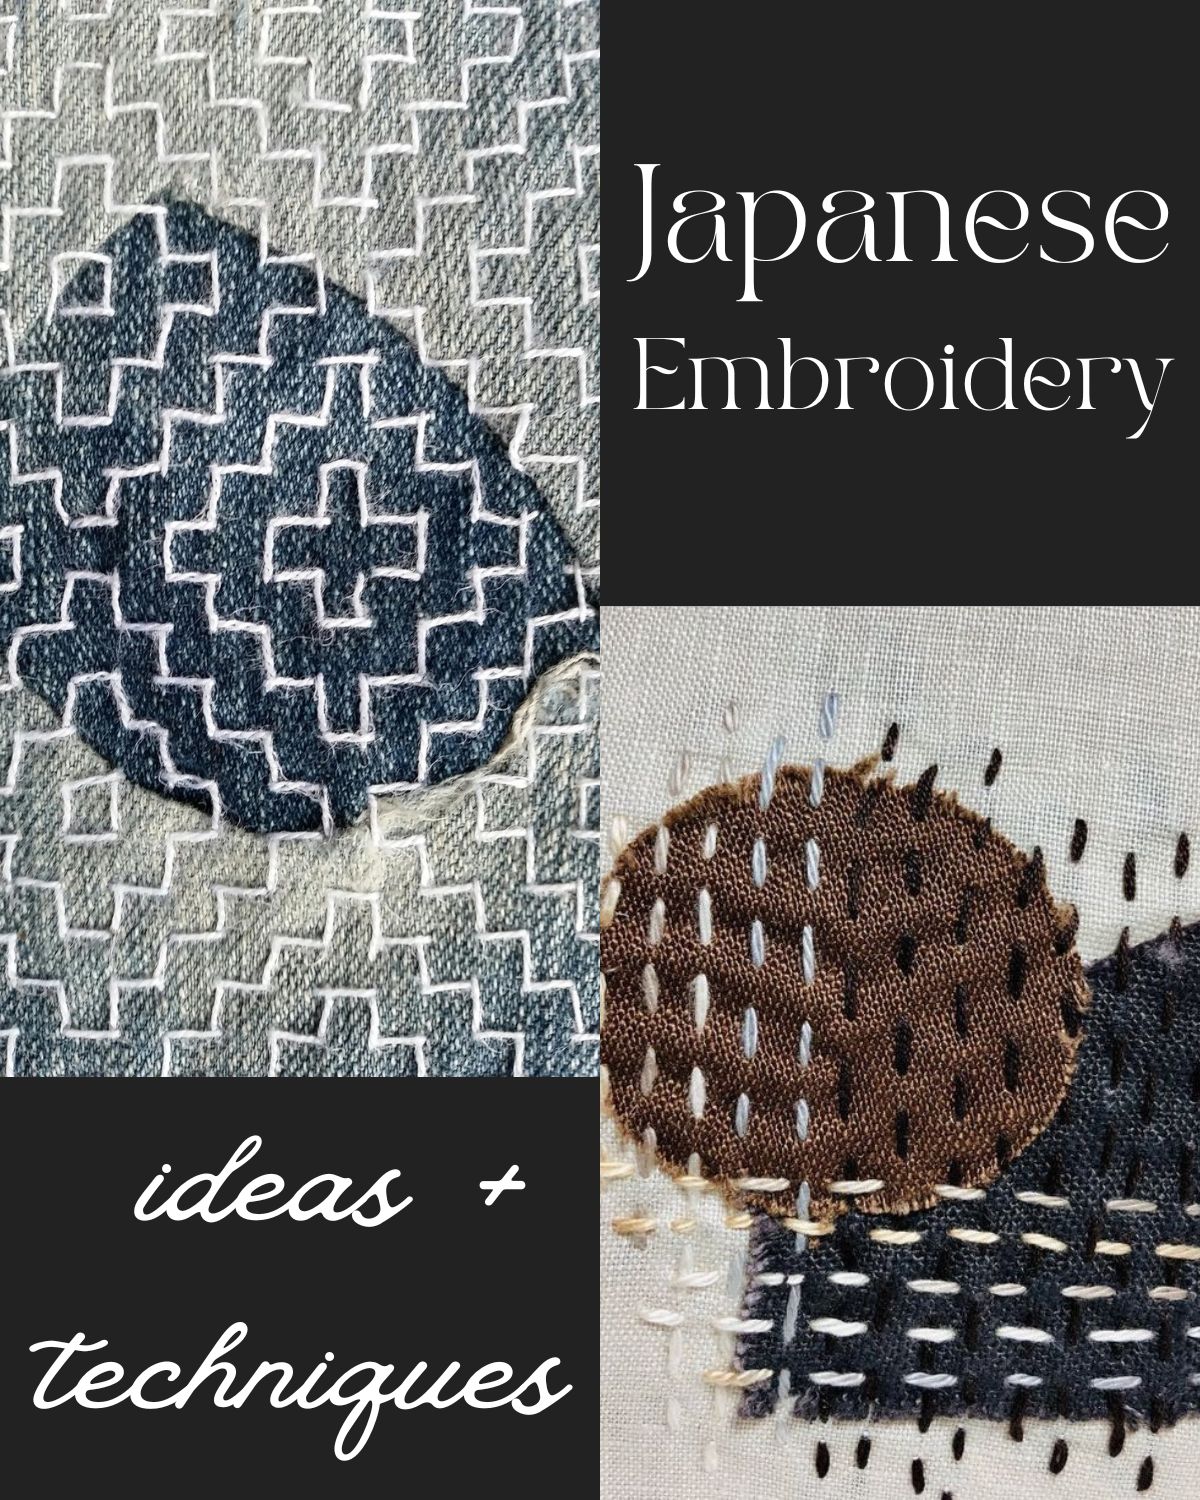 Two different sashiko patterns